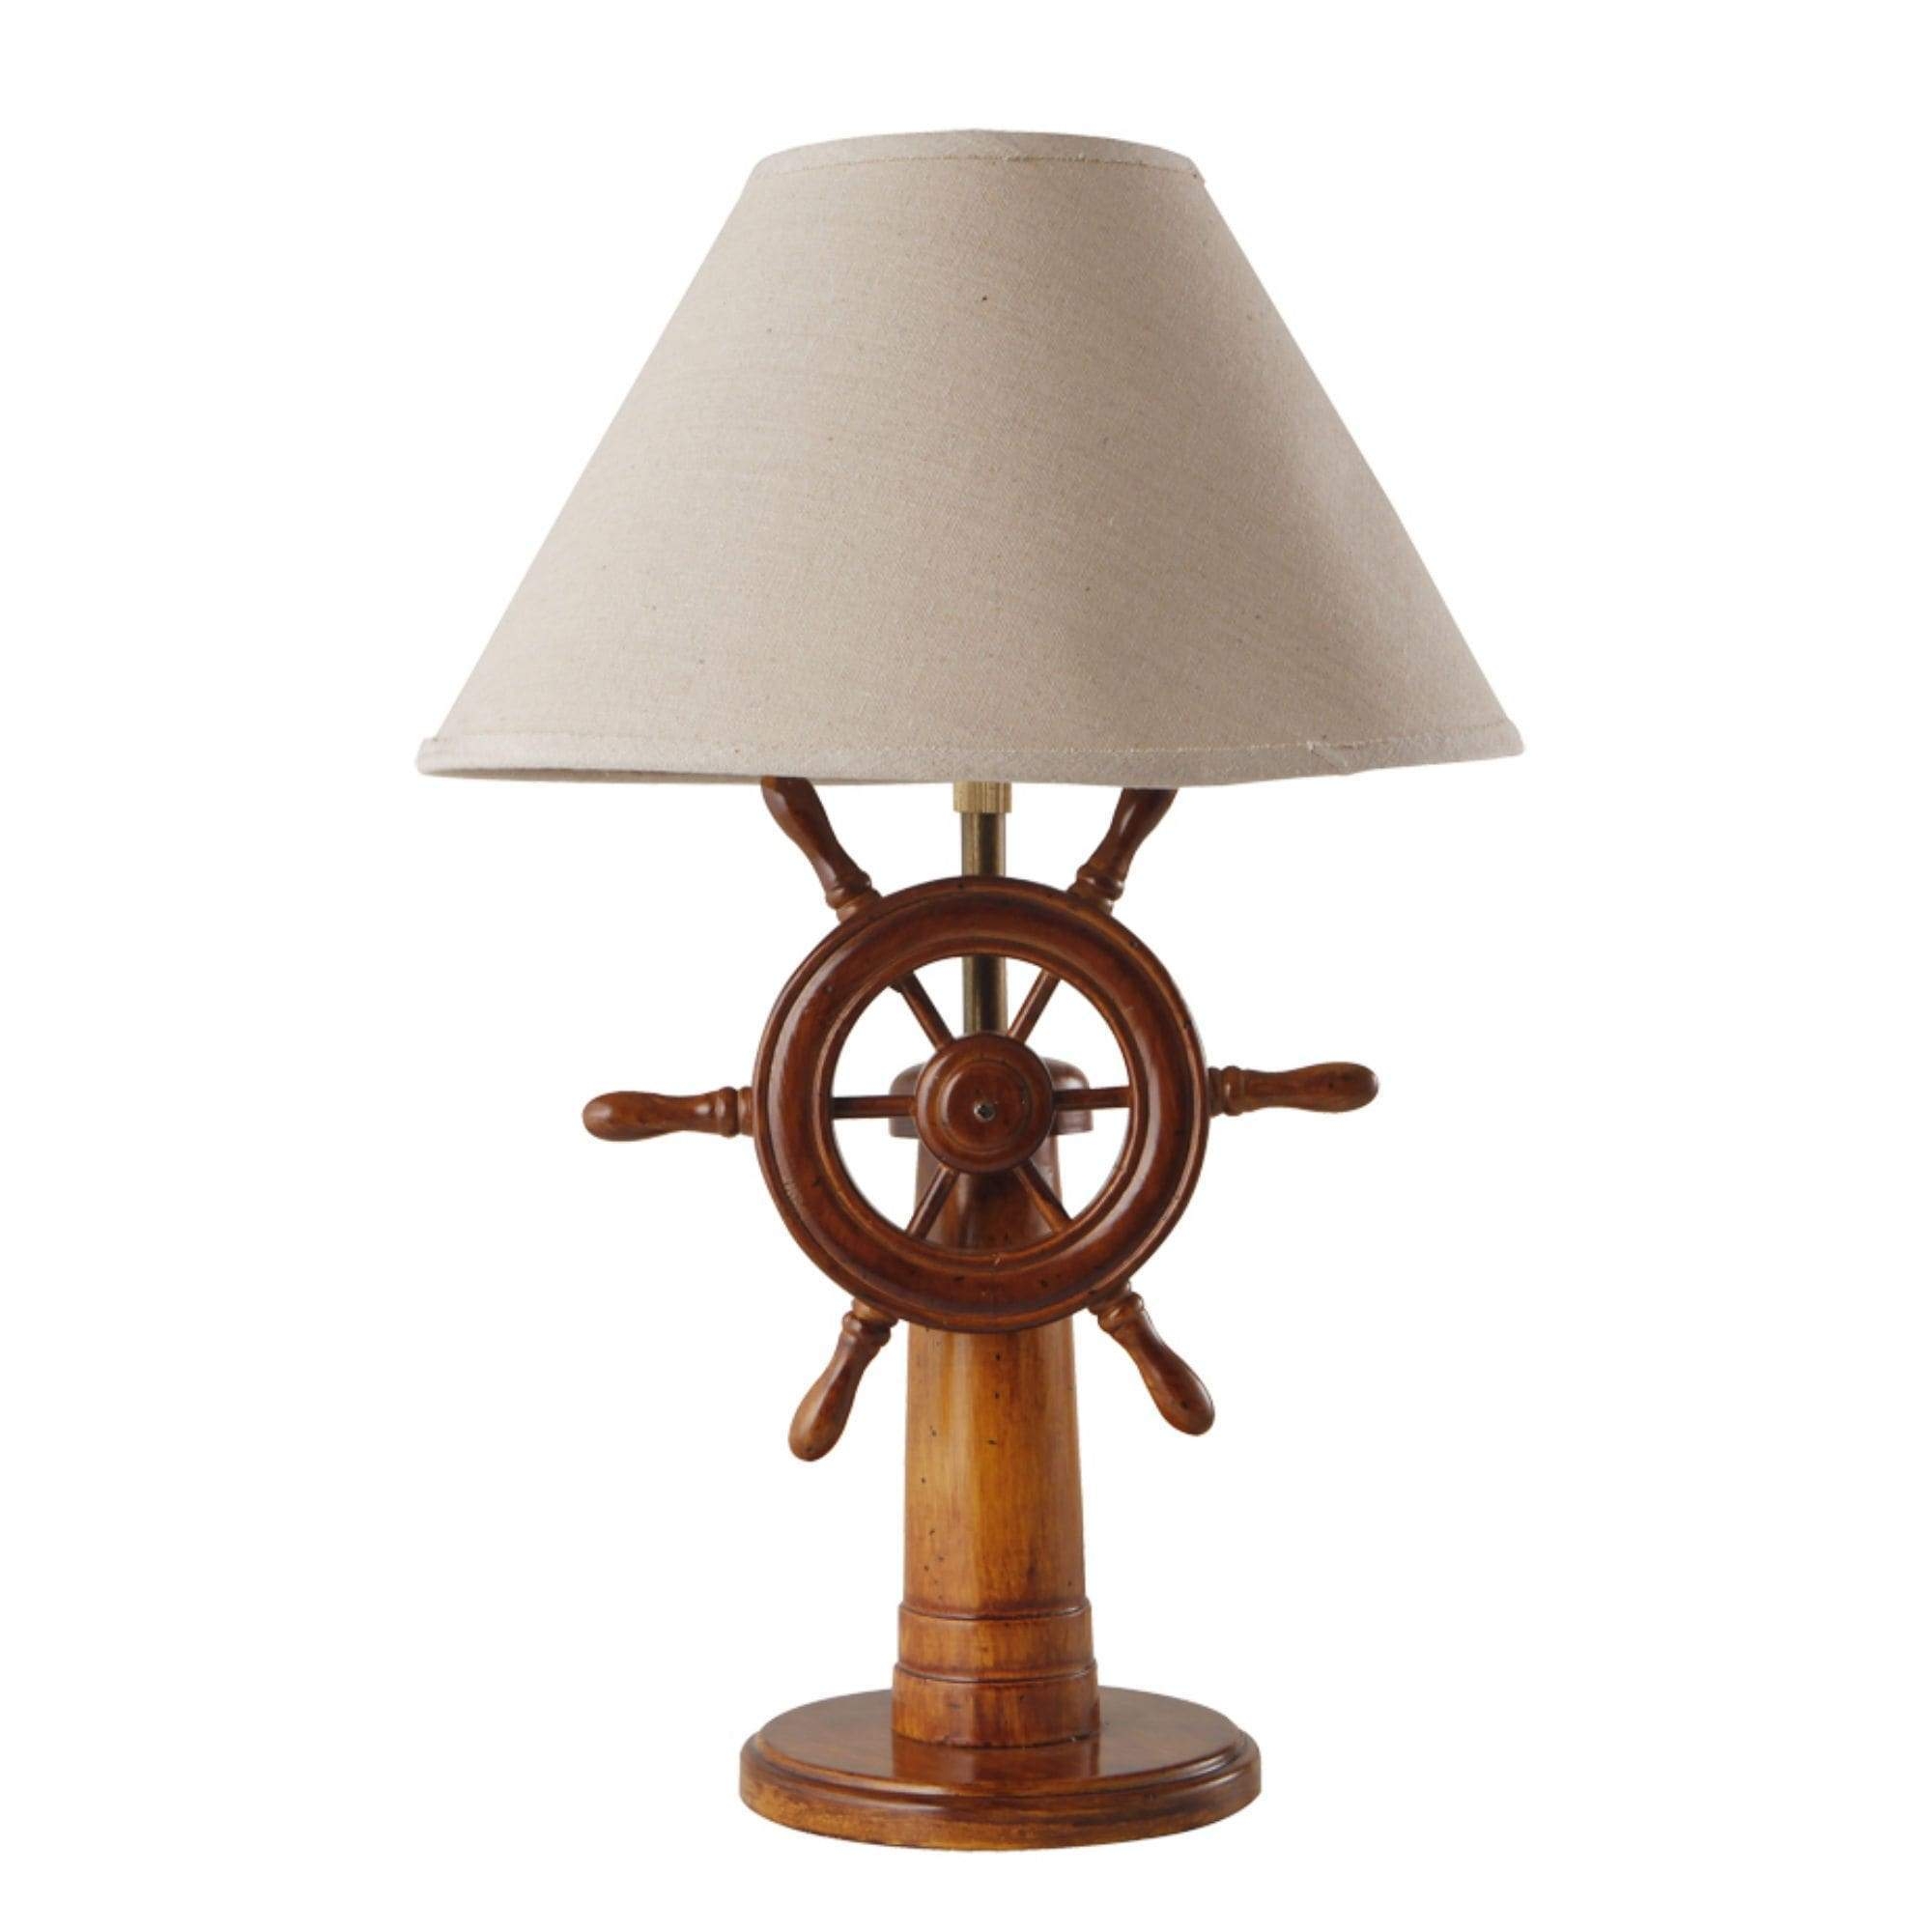 Table Lamp – Ship’s Wheel Shaped